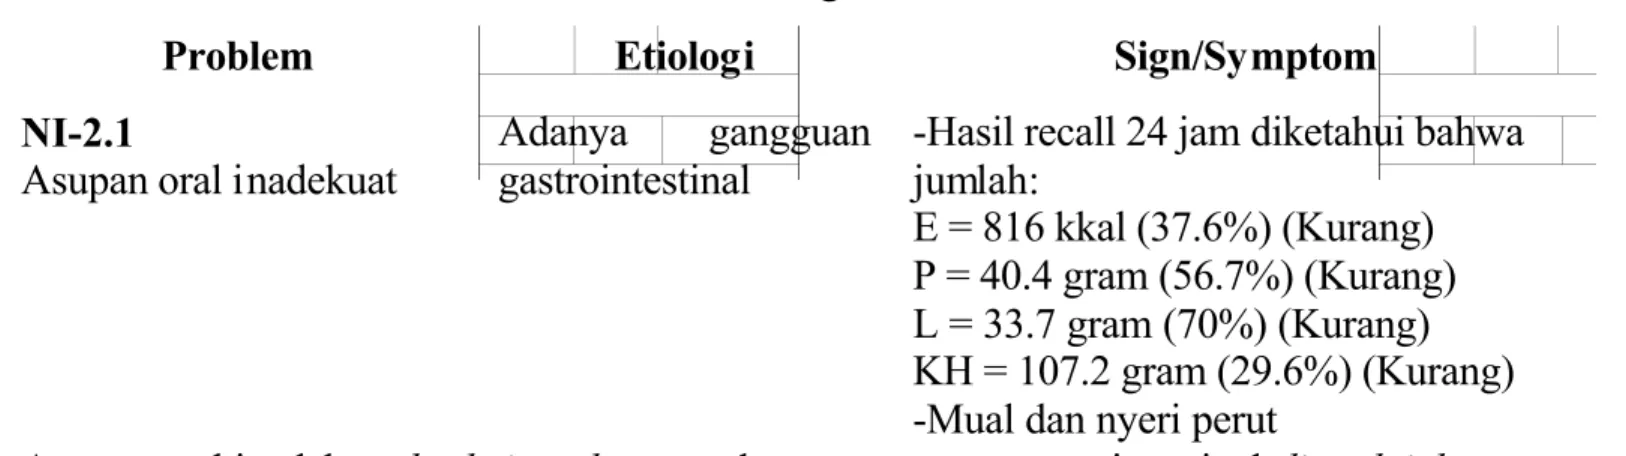 Tabel 2.9 Diagnosis Gizi